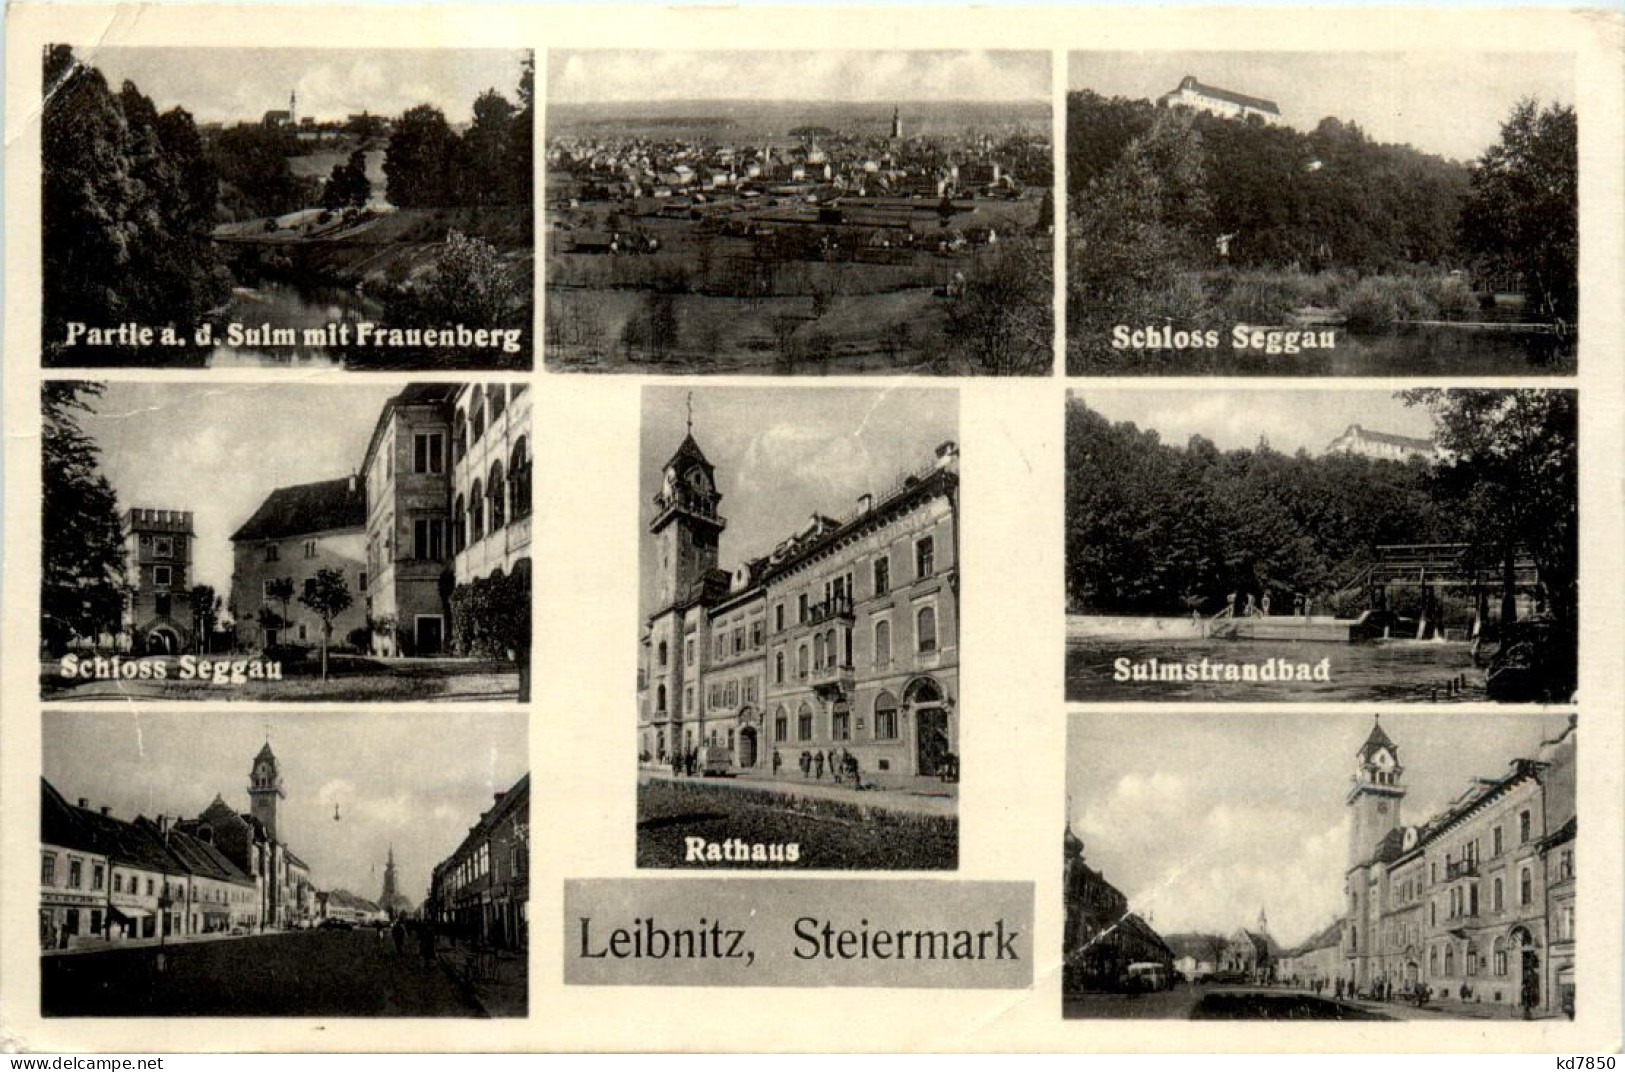 Leibnitz - Steiermark - Leibnitz